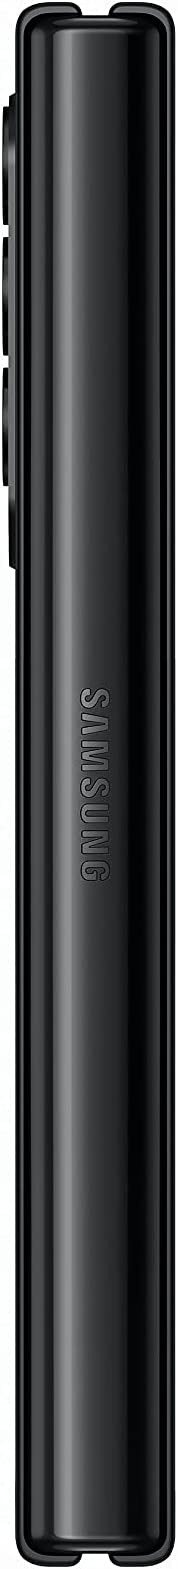 Galaxy Z Fold3 12GB 256GB 5G (Single Sim + eSim) Smartphone Phantom Black - International Version